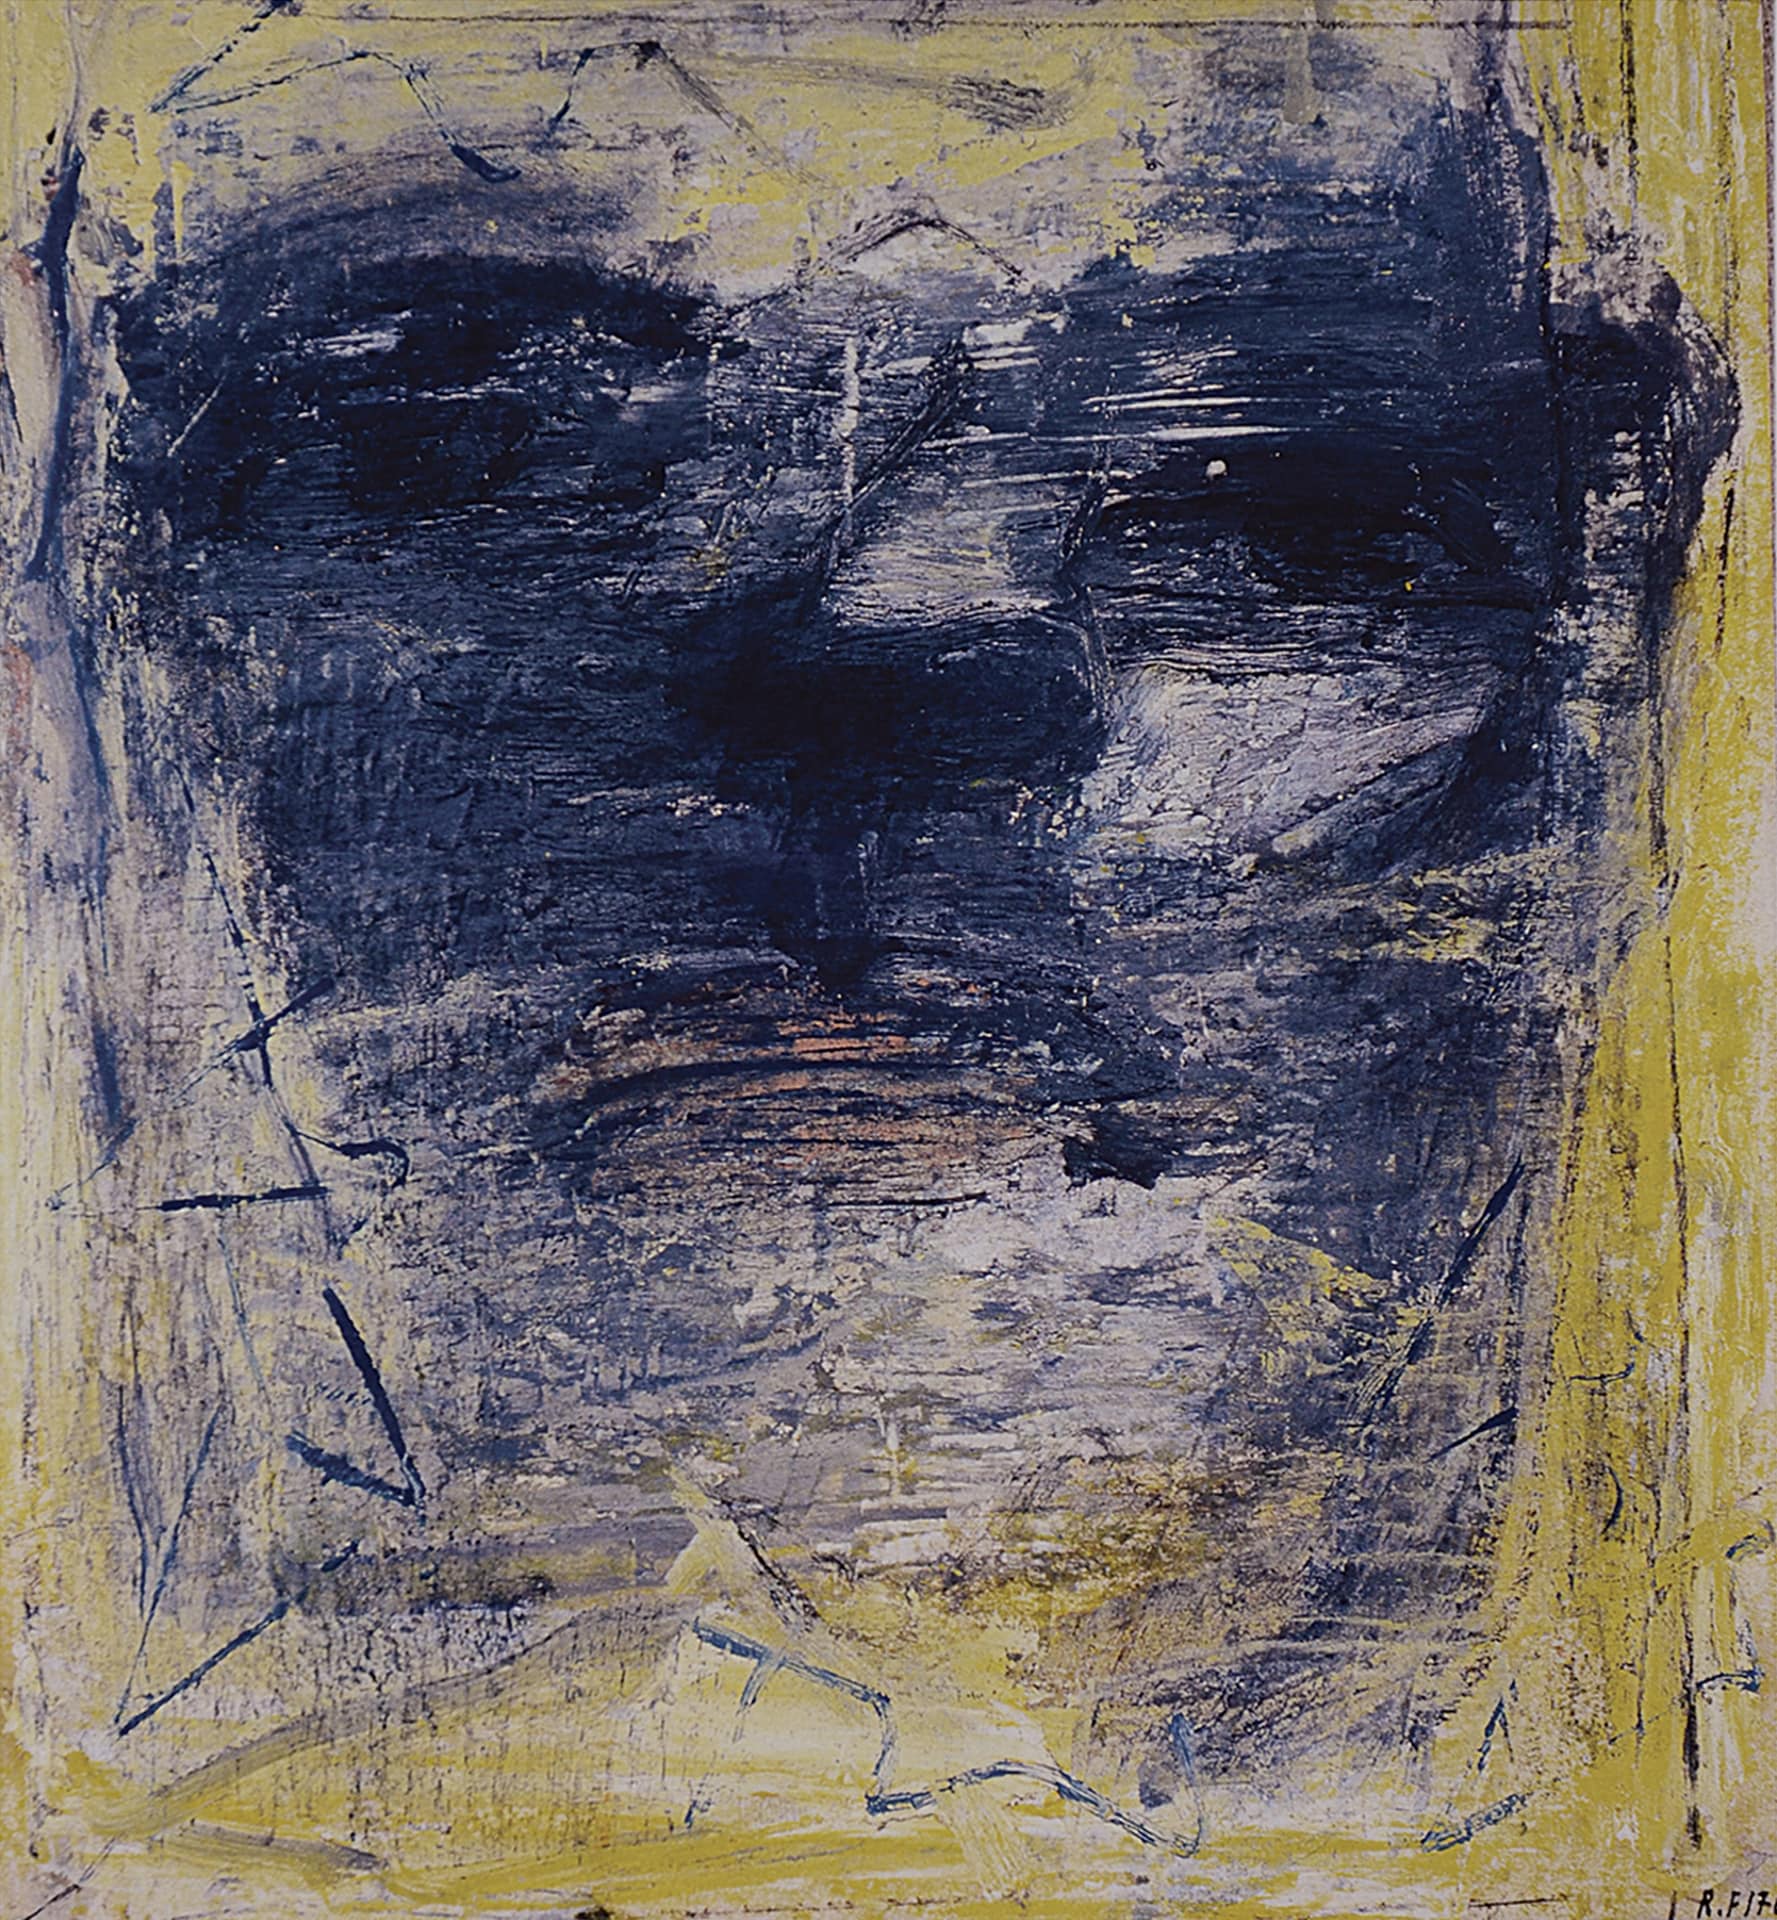 Testa - 1976 - olio su carta su tela - cm 32,5 x 30 - Museo Tadini, Milano